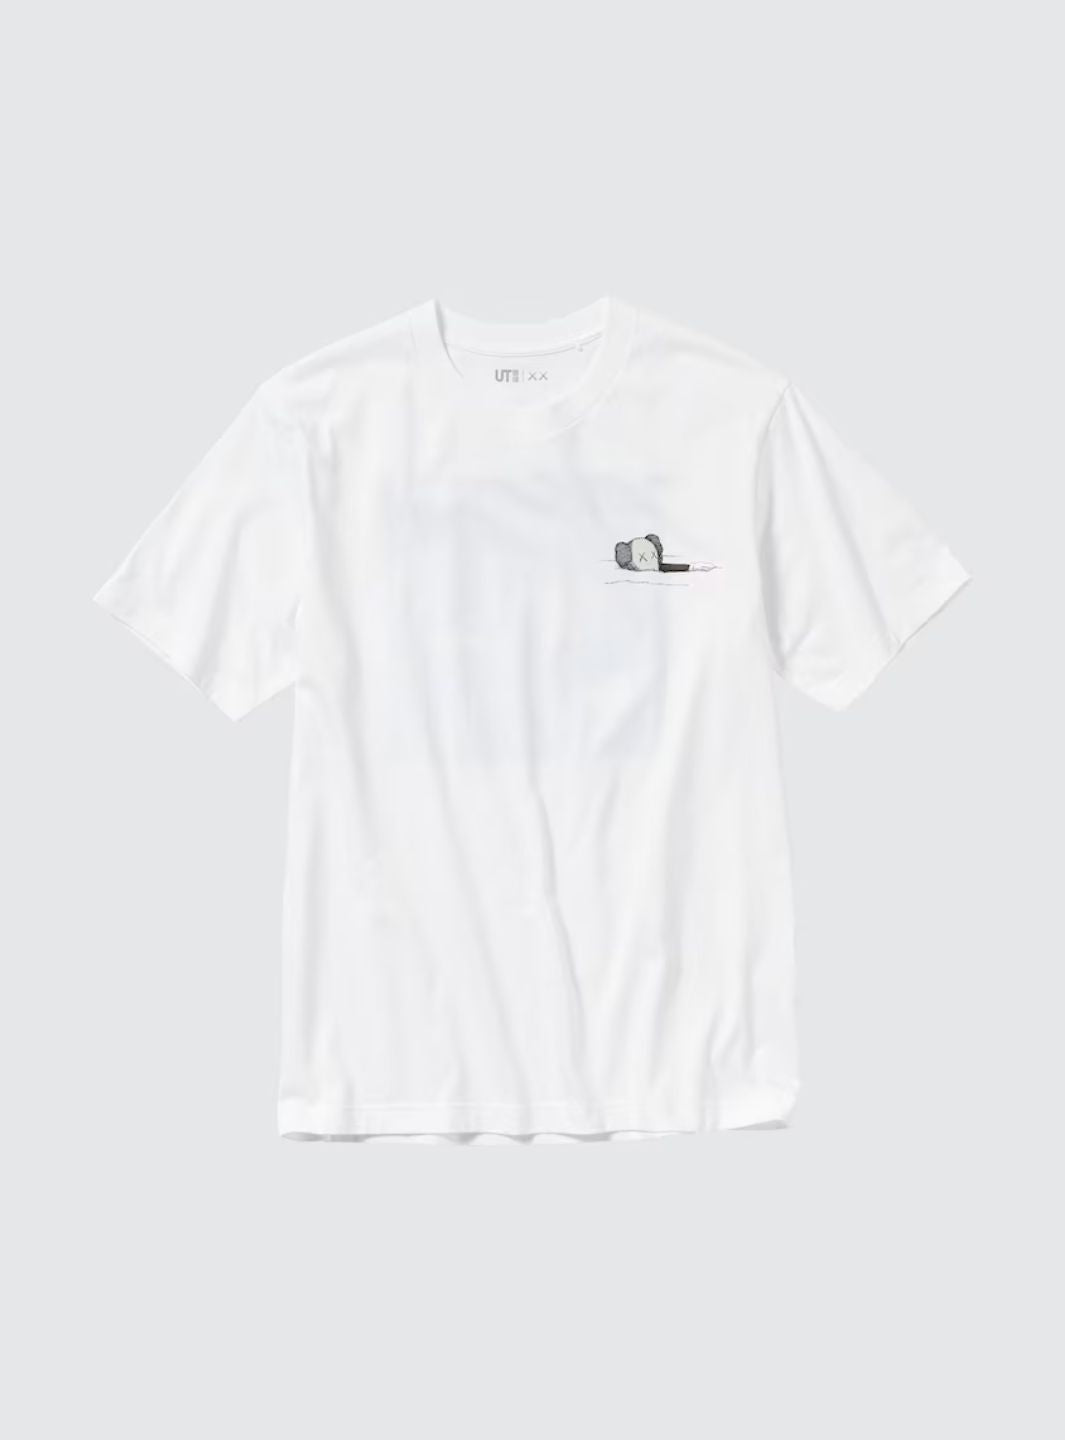 Uniqlo T-Shirt KAWS Artbook Cover White | ResellZone